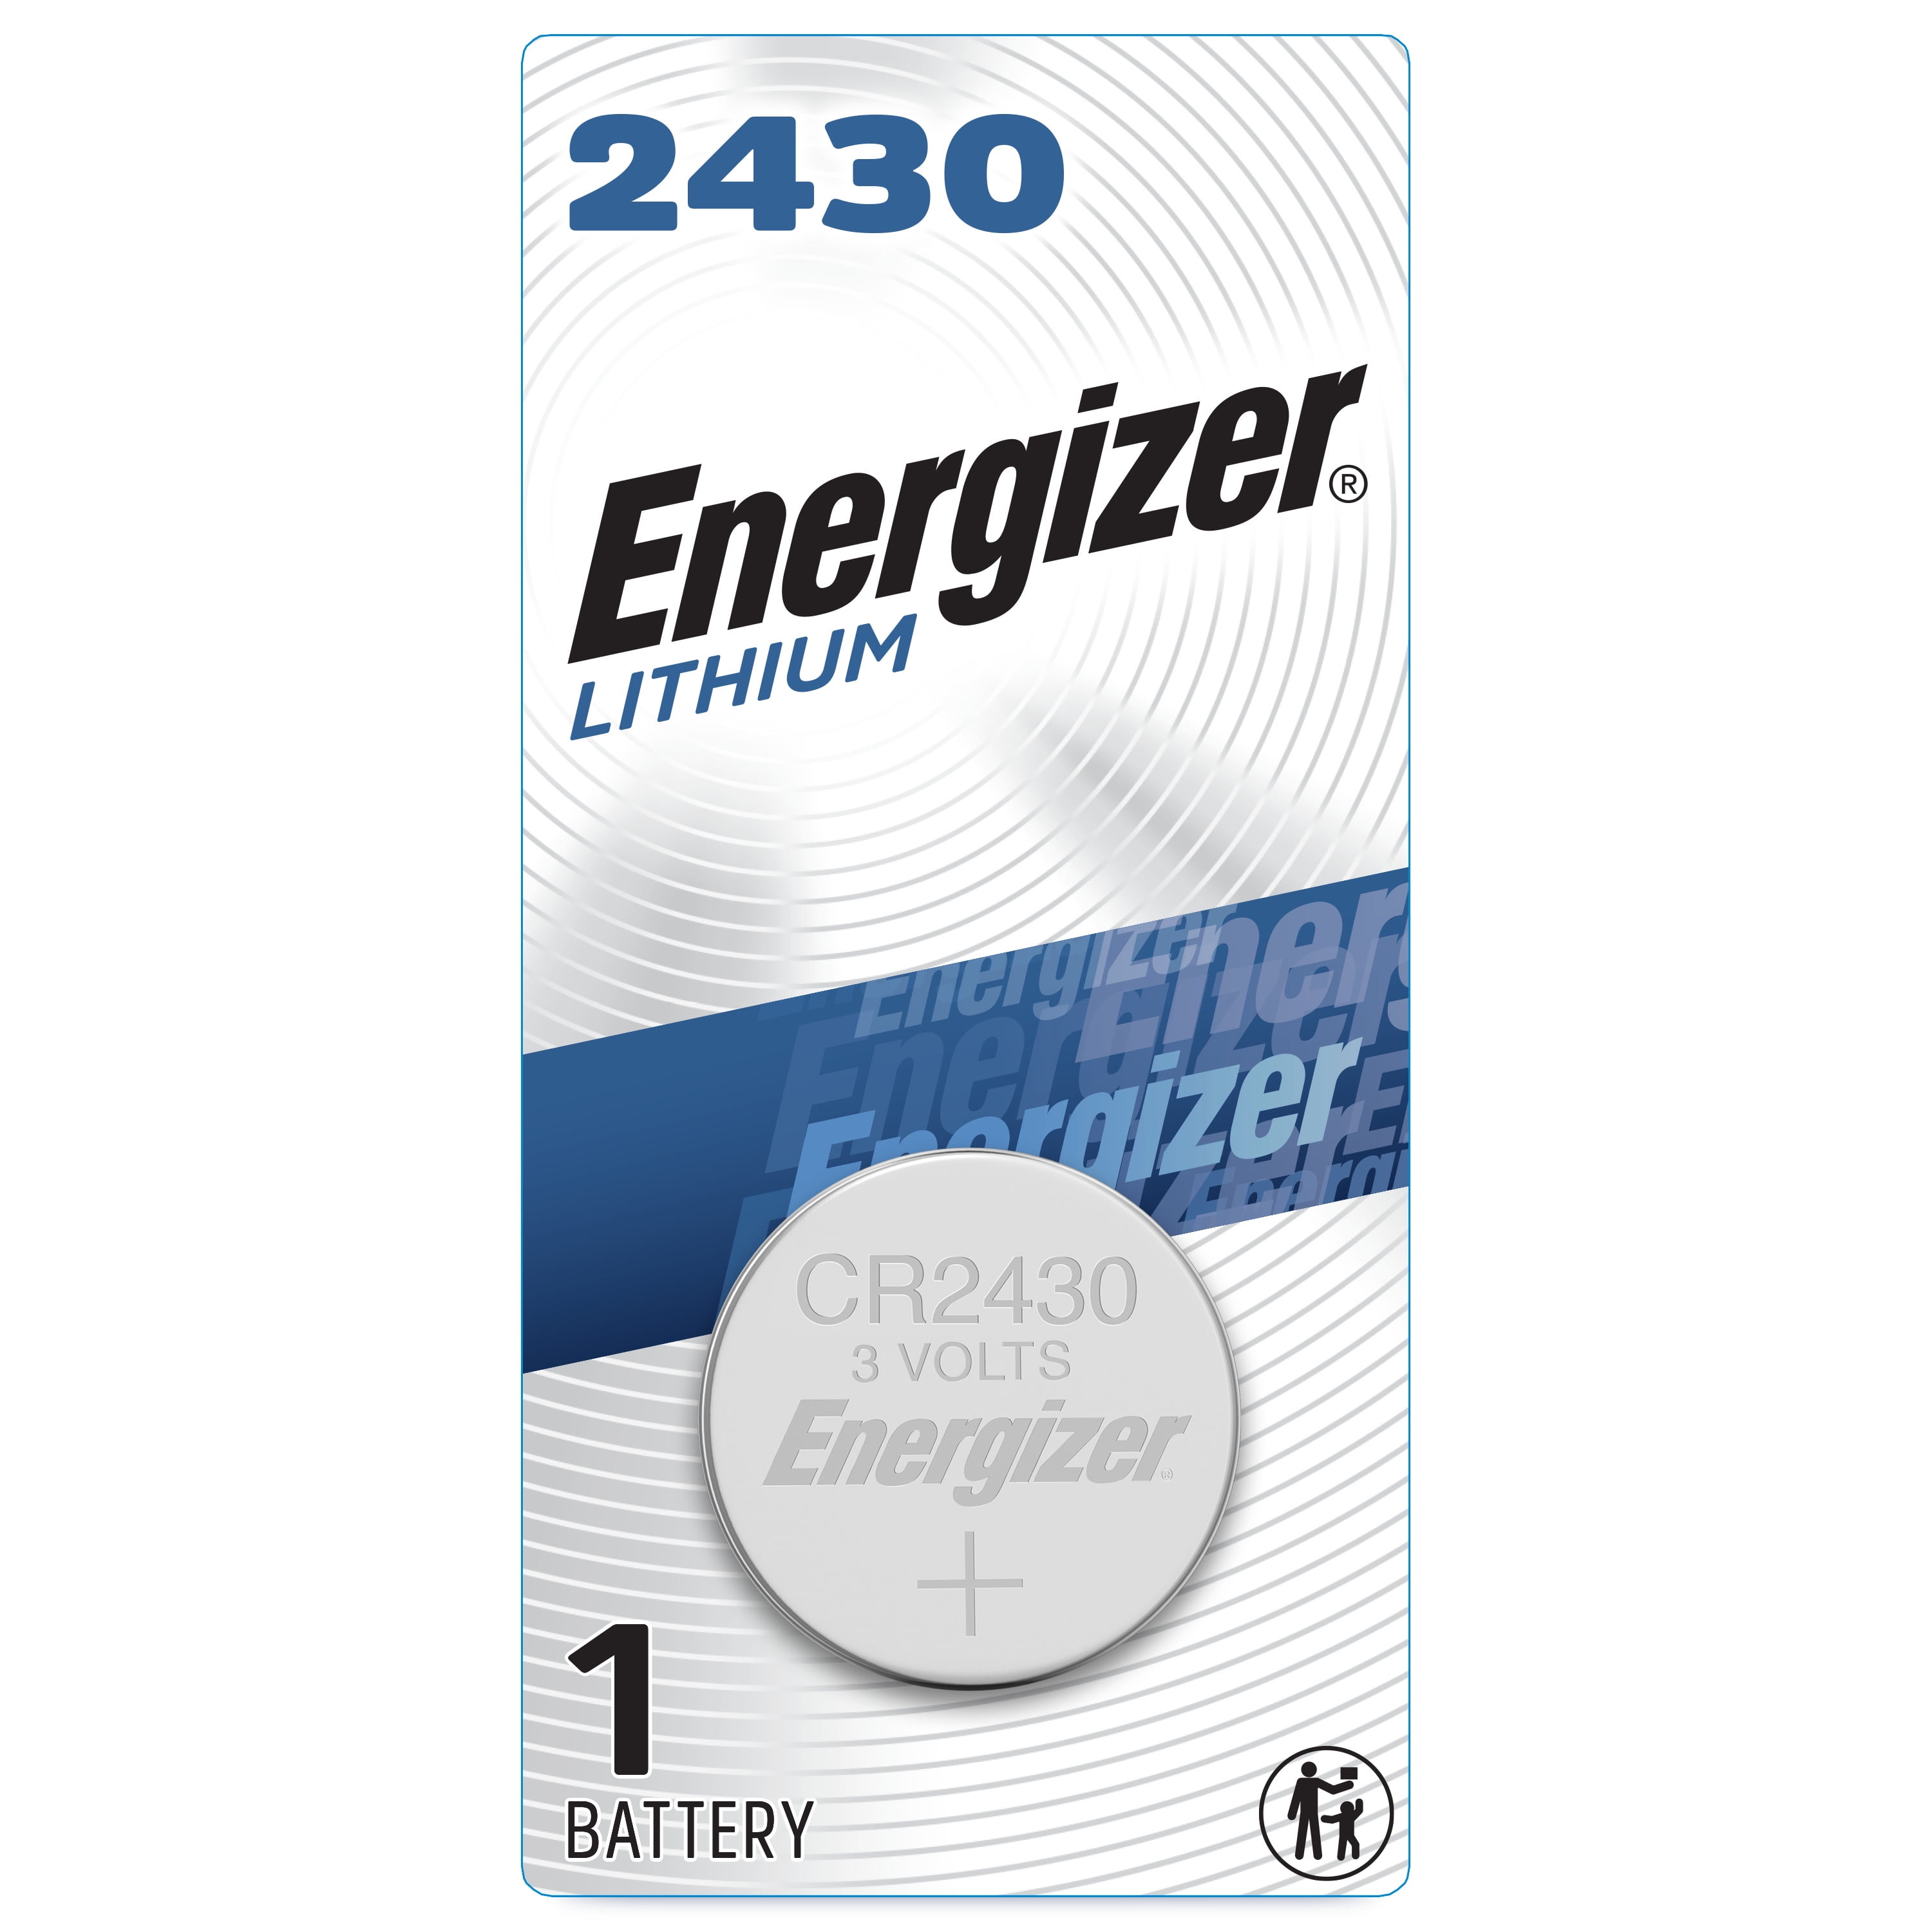 huid meesterwerk tussen Energizer 2430 Lithium Coin Battery, 1 Pack - Walmart.com